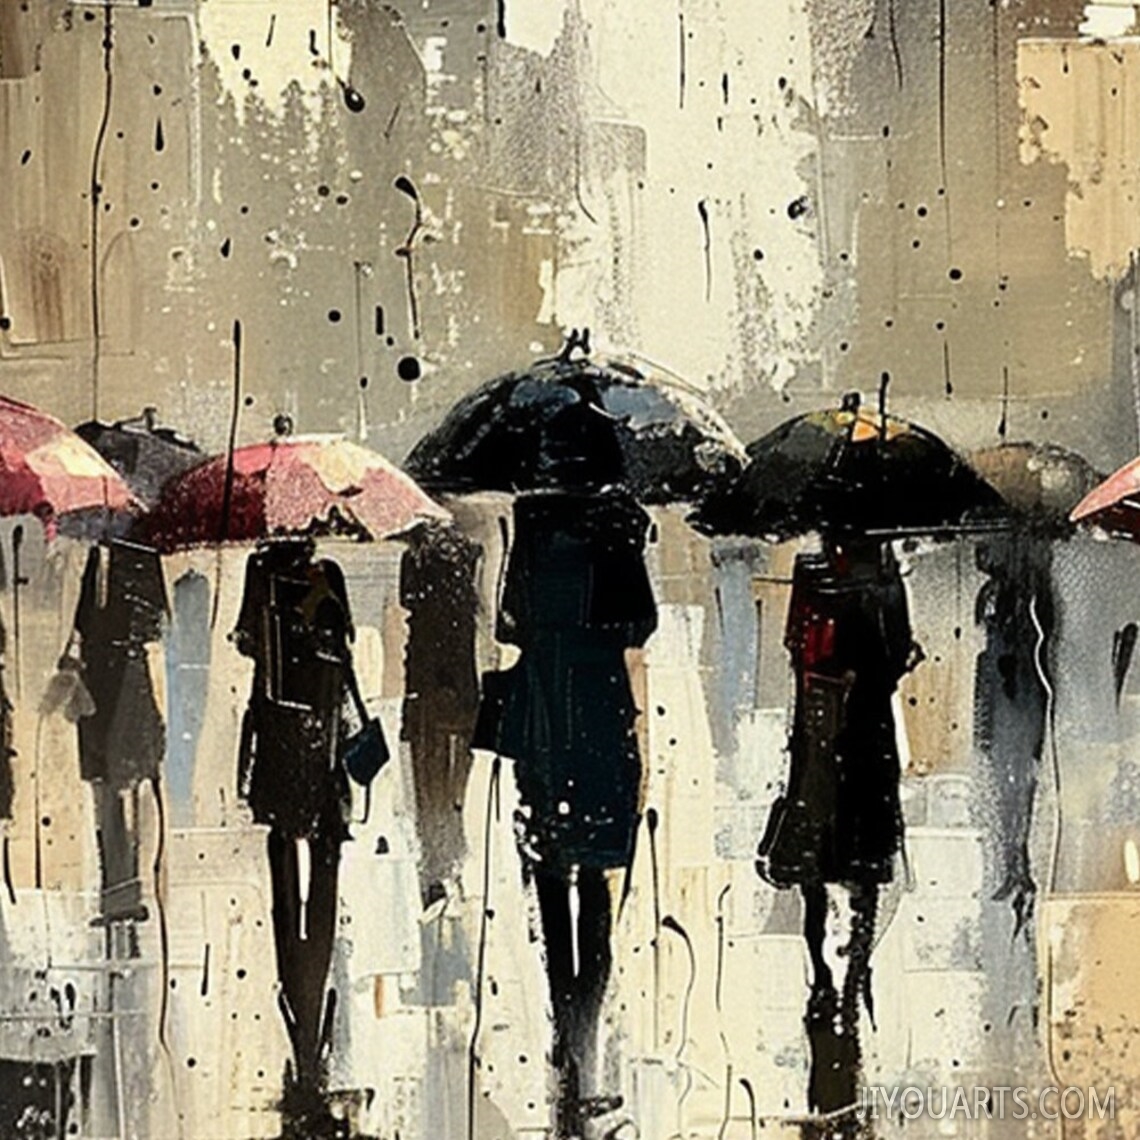 Abstract Walking People Oil Painting on Canvas, Large Wall Art Original Rainy Street Scene Wall Art